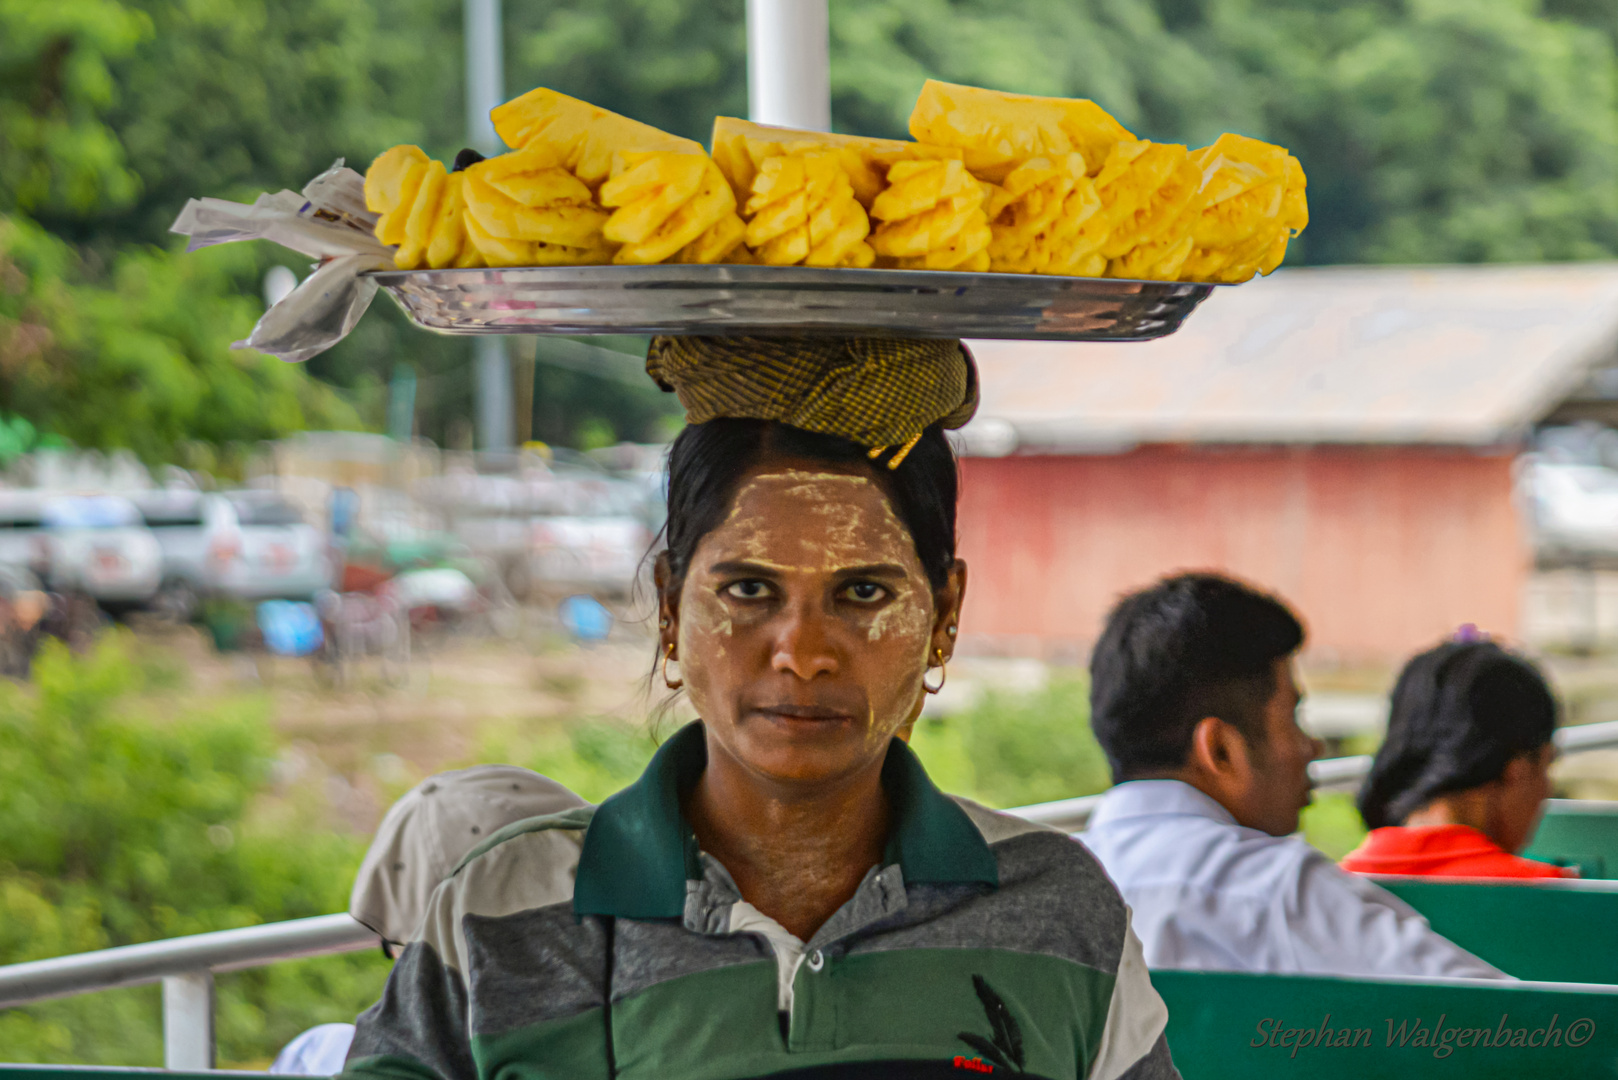 Ananasverkäuferin auf dem Yangon River